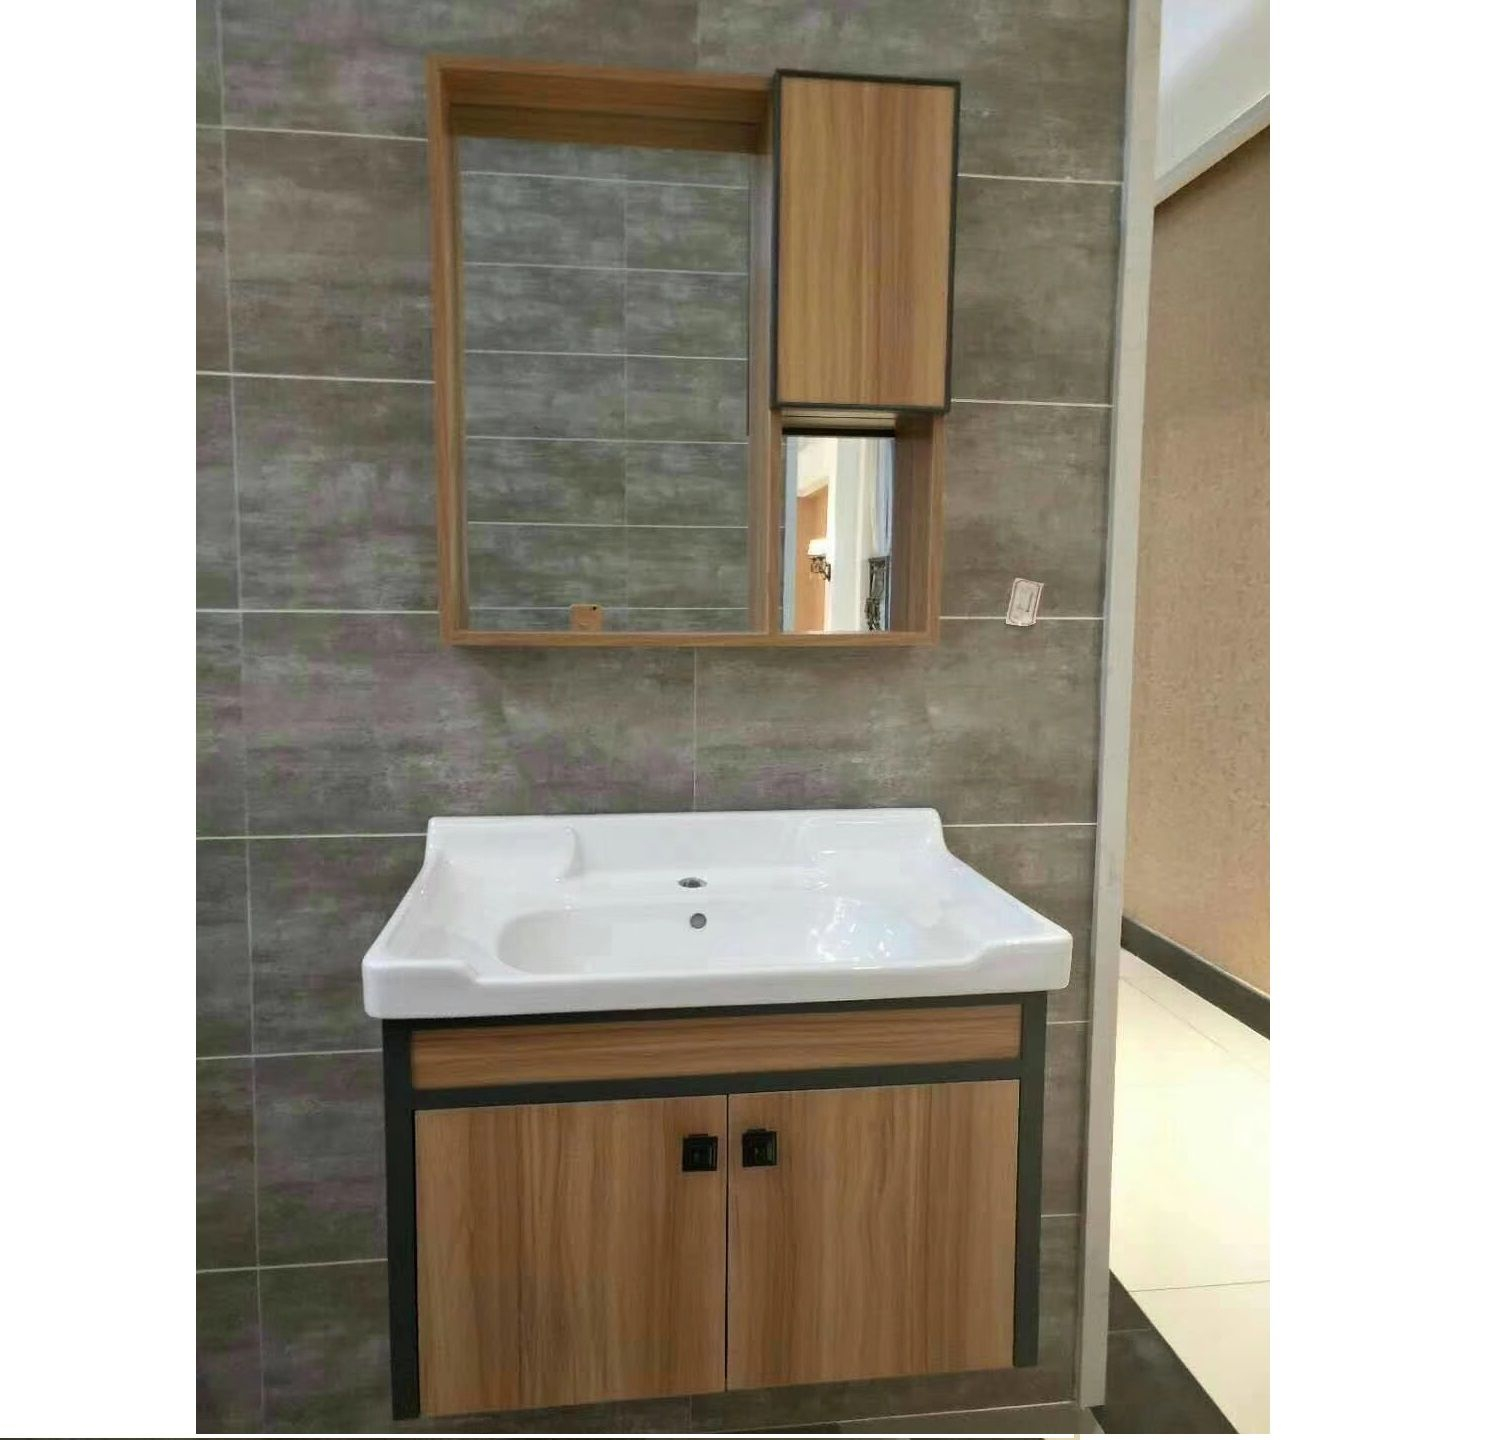 70cm Bathroom Storage Cabinet With Side Cabinet Wood Pattern regarding size 1488 X 1440